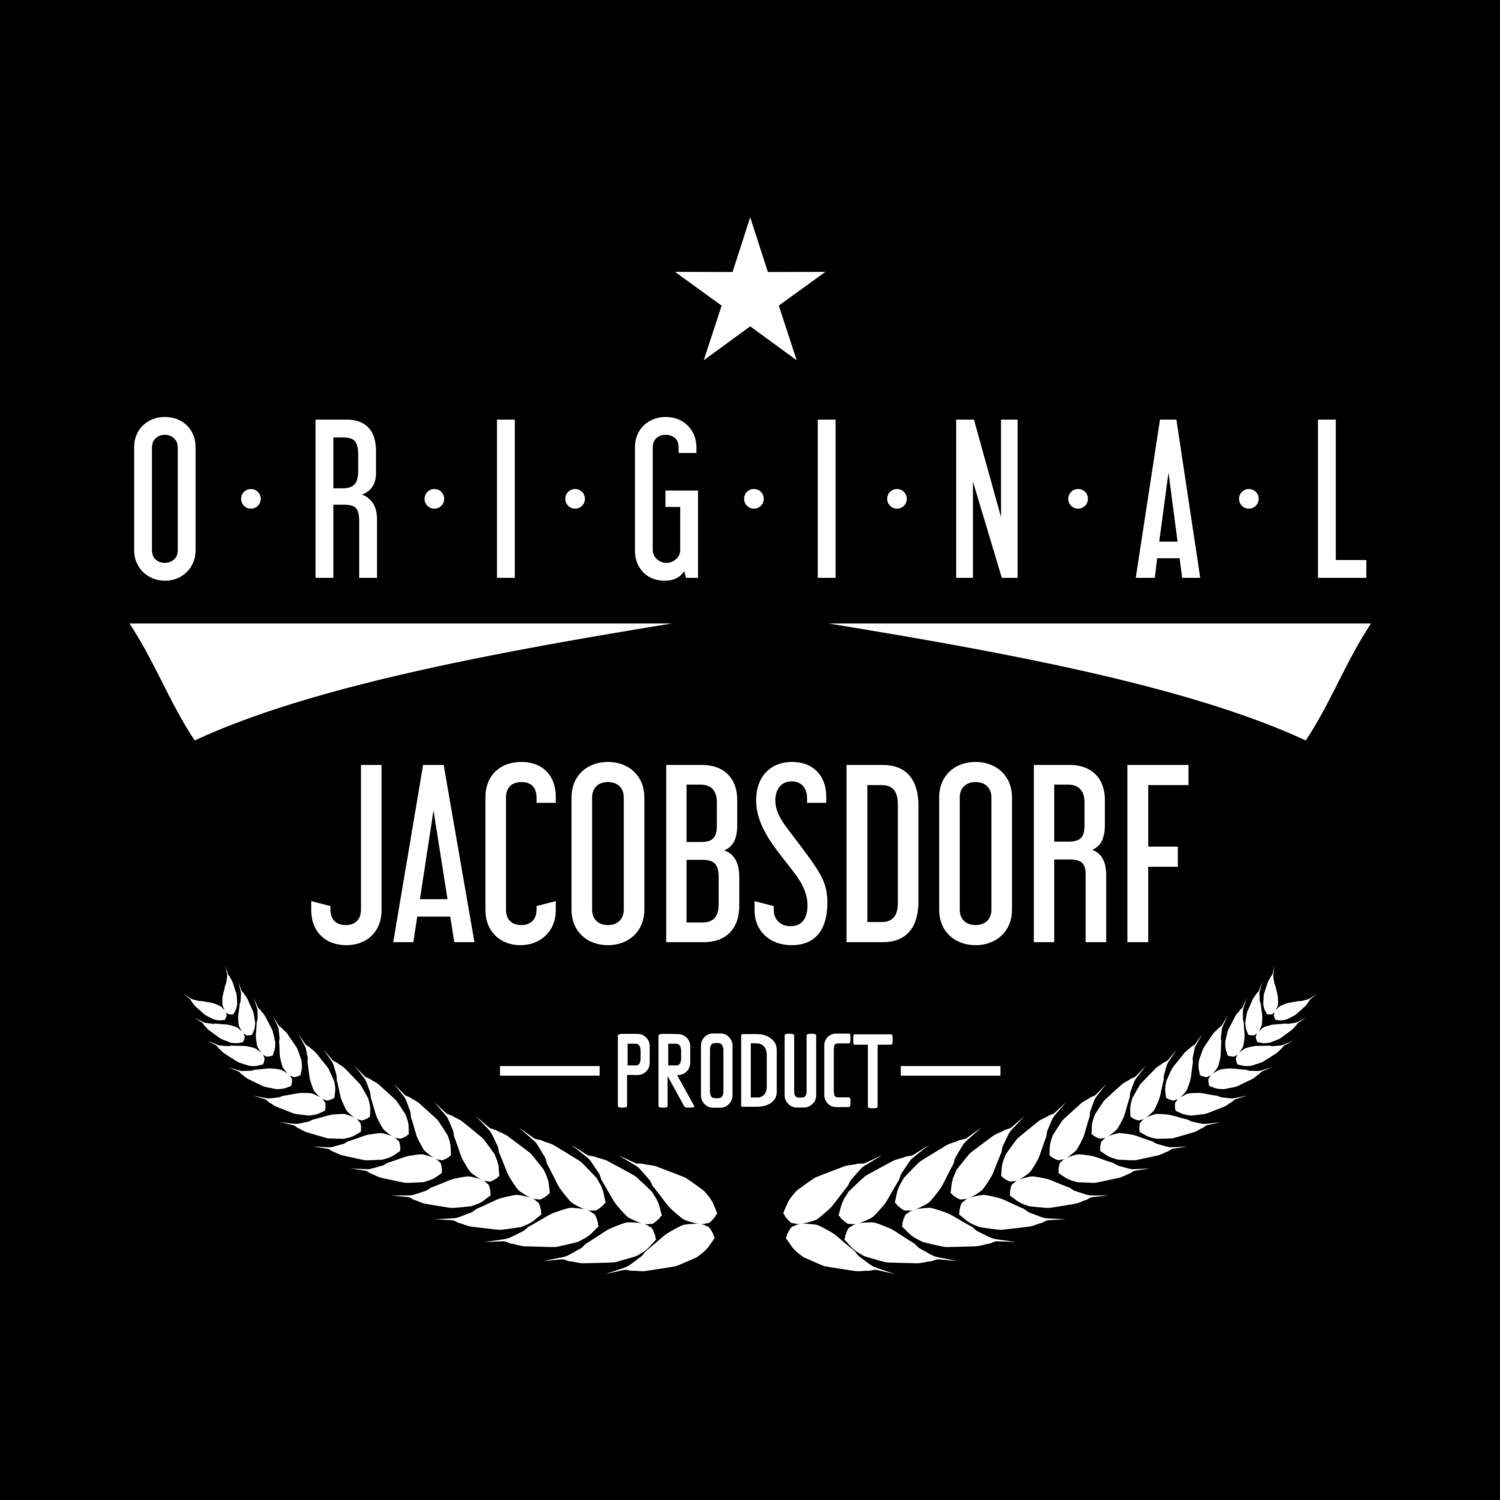 Jacobsdorf T-Shirt »Original Product«